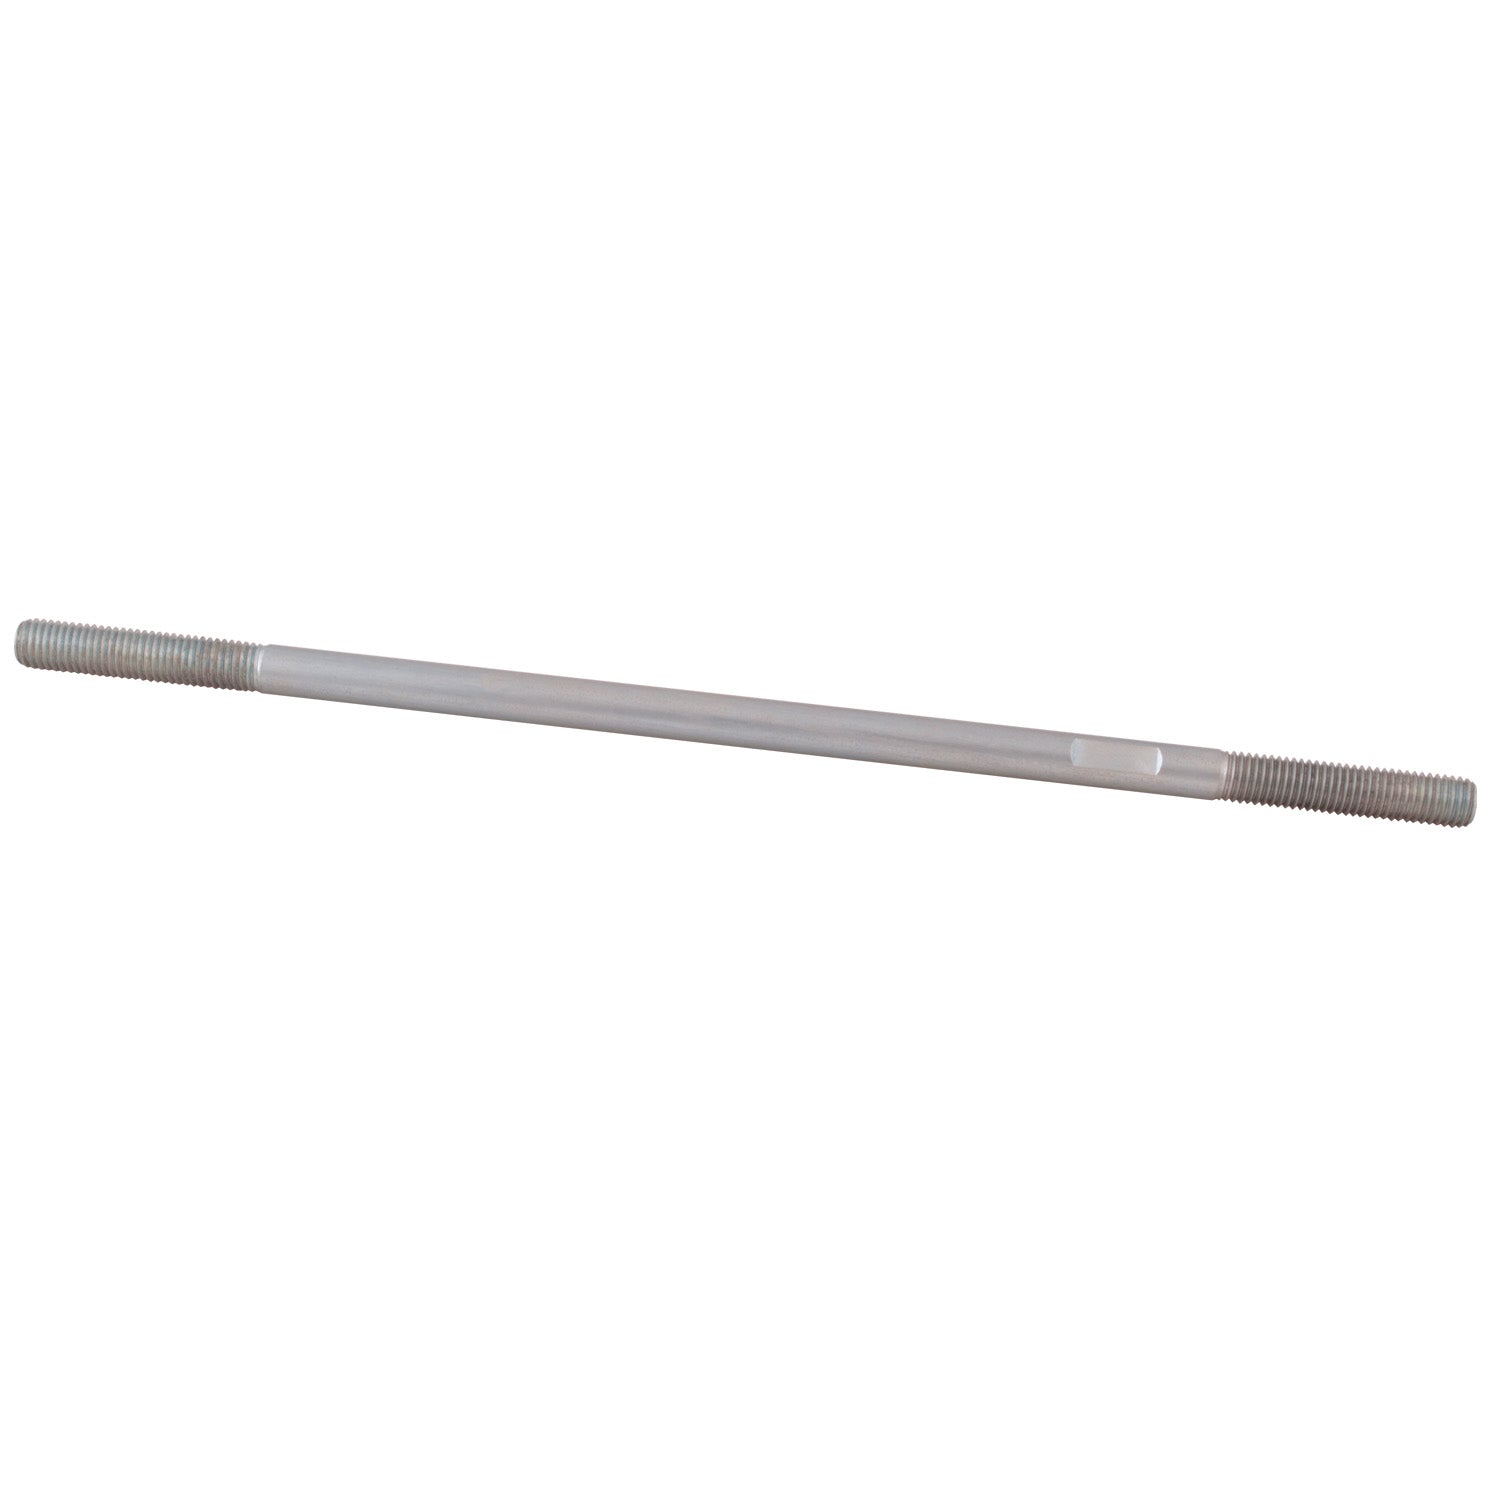 QA1 1698-117 Linkage Rod, Carbon Steel 5/16-24 - 5/16-24 X 4.5 inch inch Long